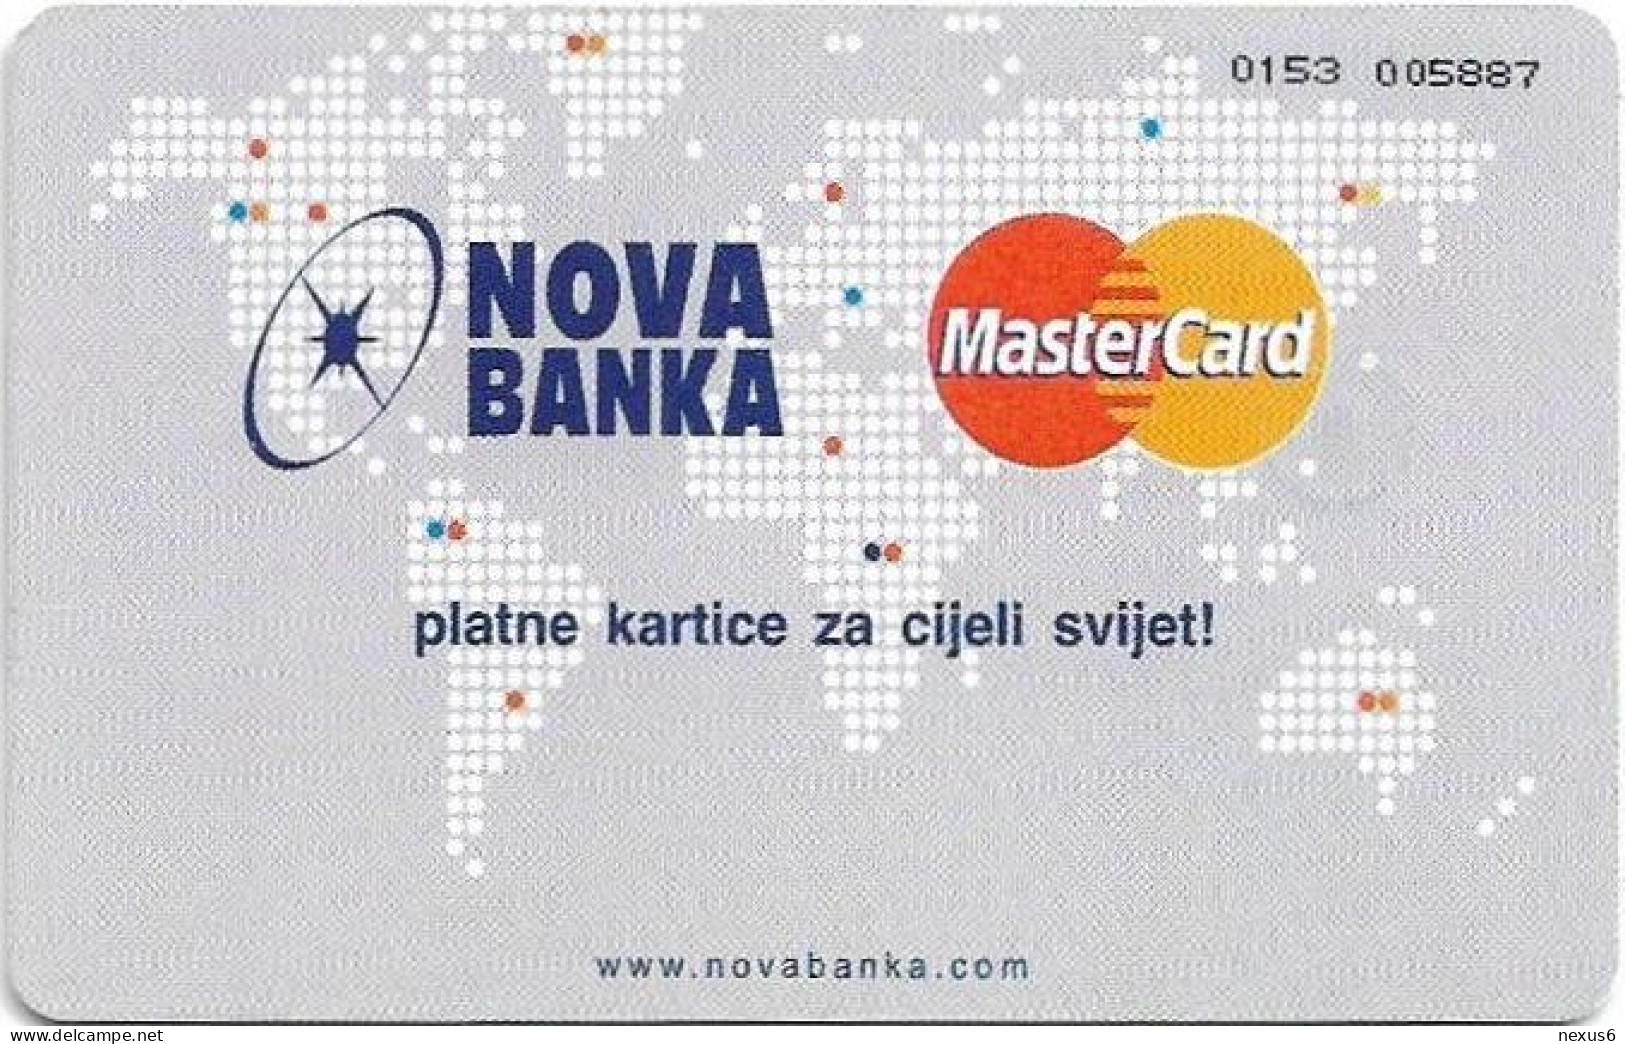 Bosnia - Republika Srpska - Nova Banka - Mastercard 1, Gem5 Red, 01.2005, 150Units, Used - Bosnien